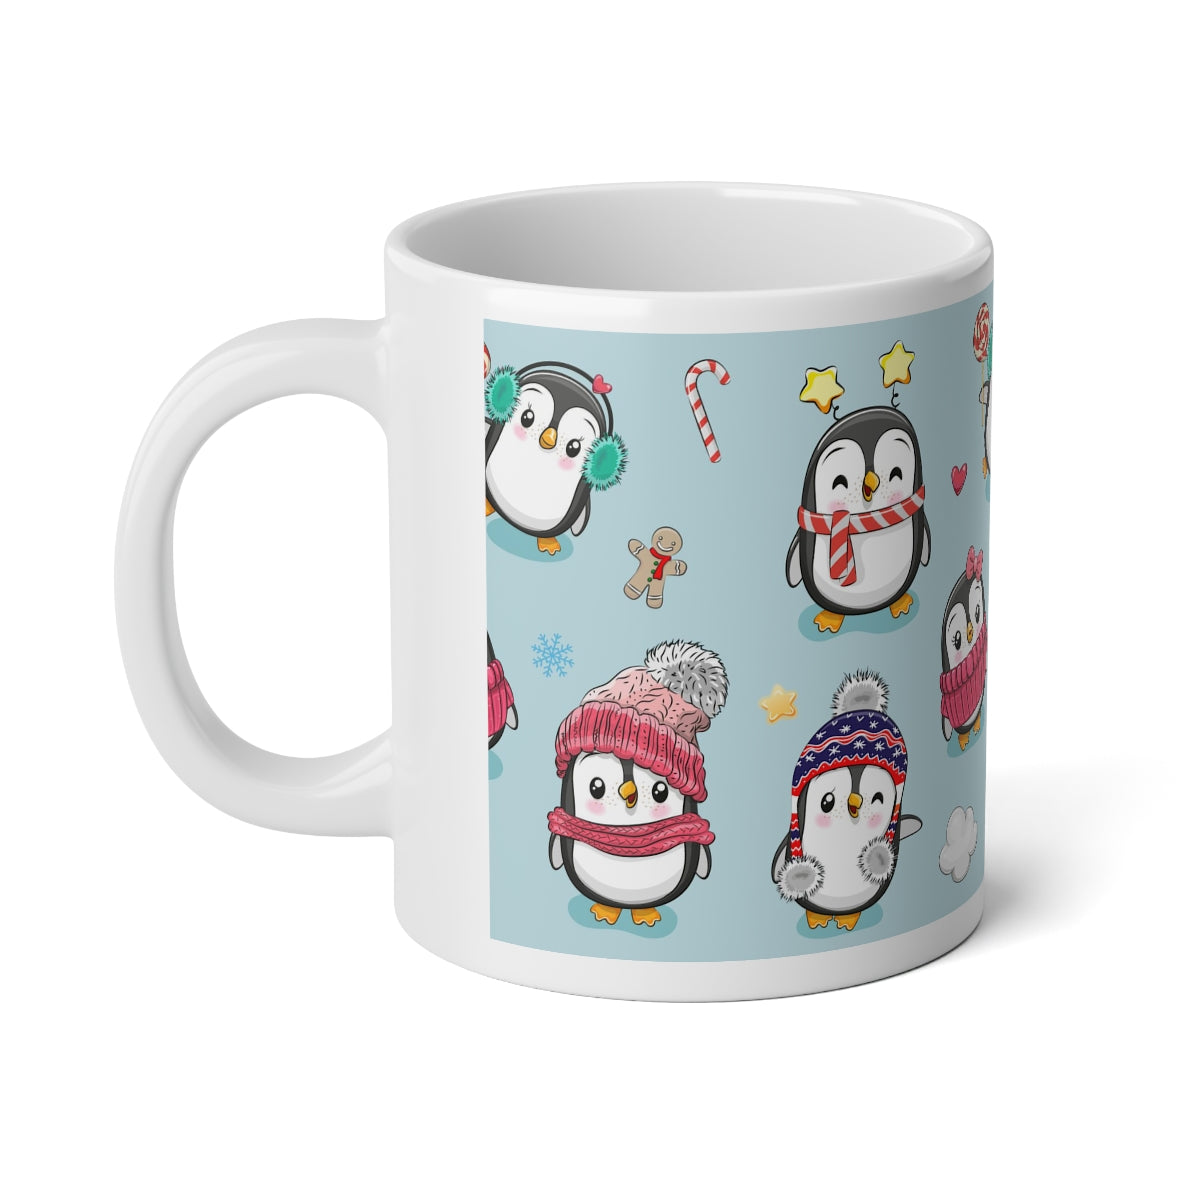 Penguins in Winter Clothes Jumbo Mug, 20oz